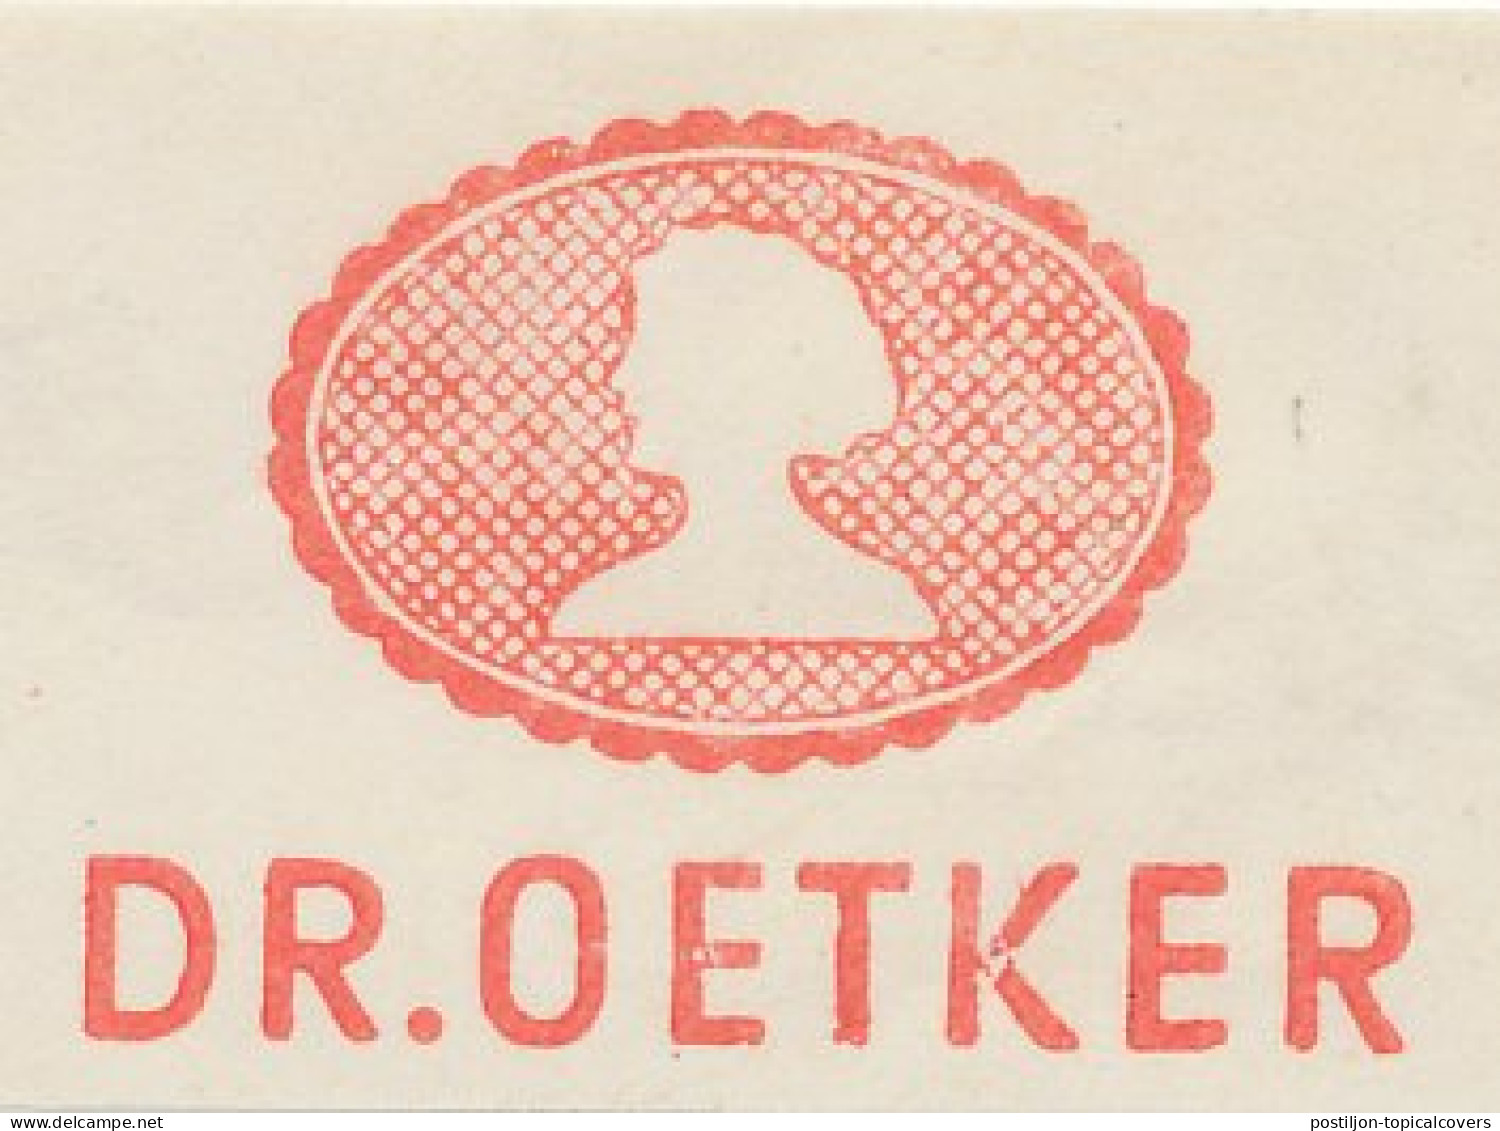 Meter Cut Deutsche Post / Germany 1950 Foodproducts - Dr. Oetker - Alimentation